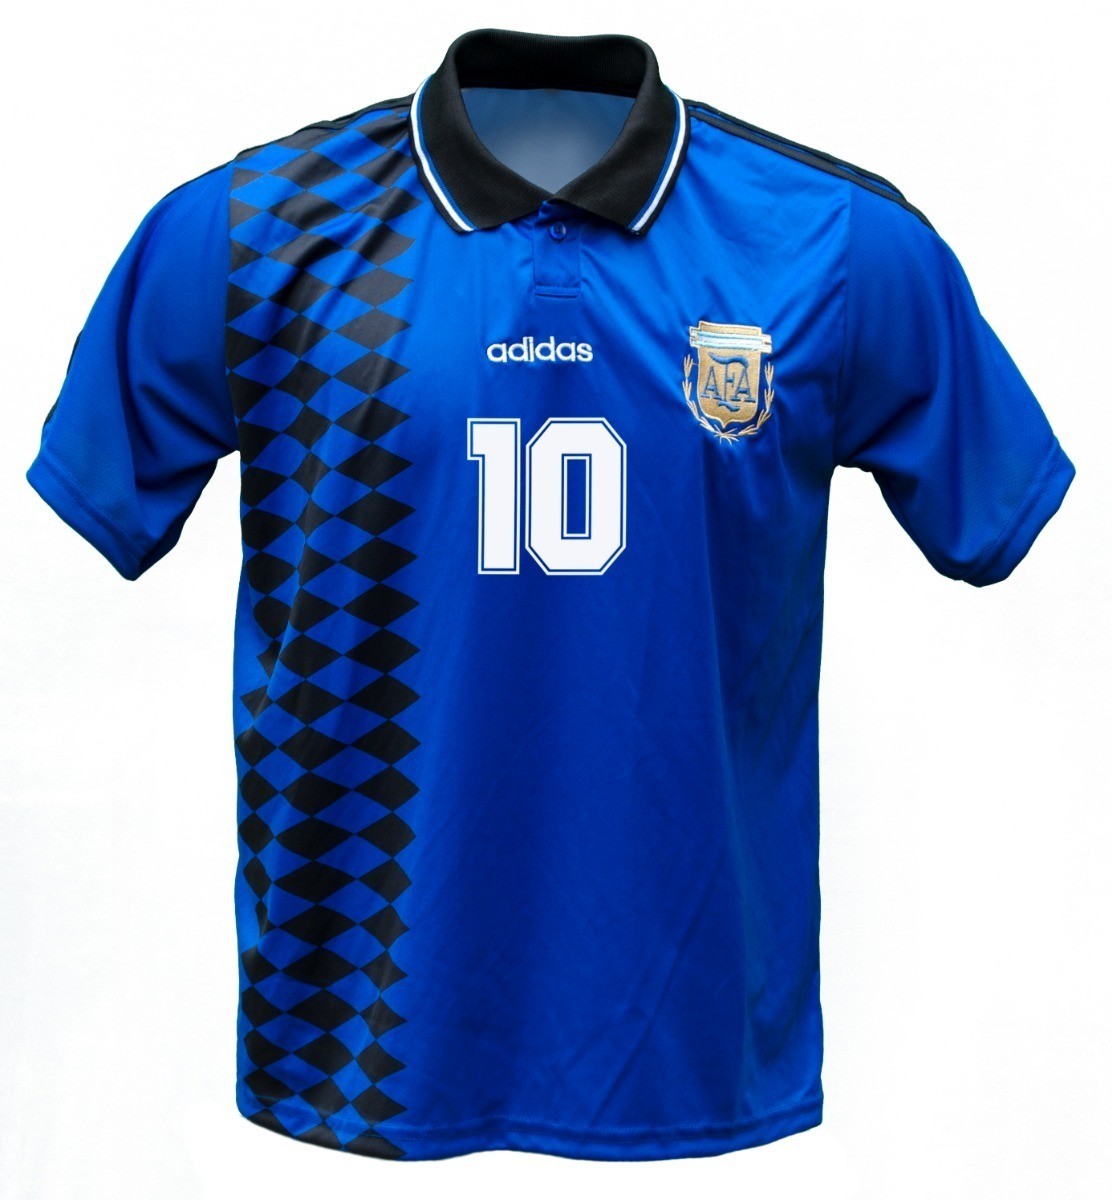 usa 1994 world cup jersey replica